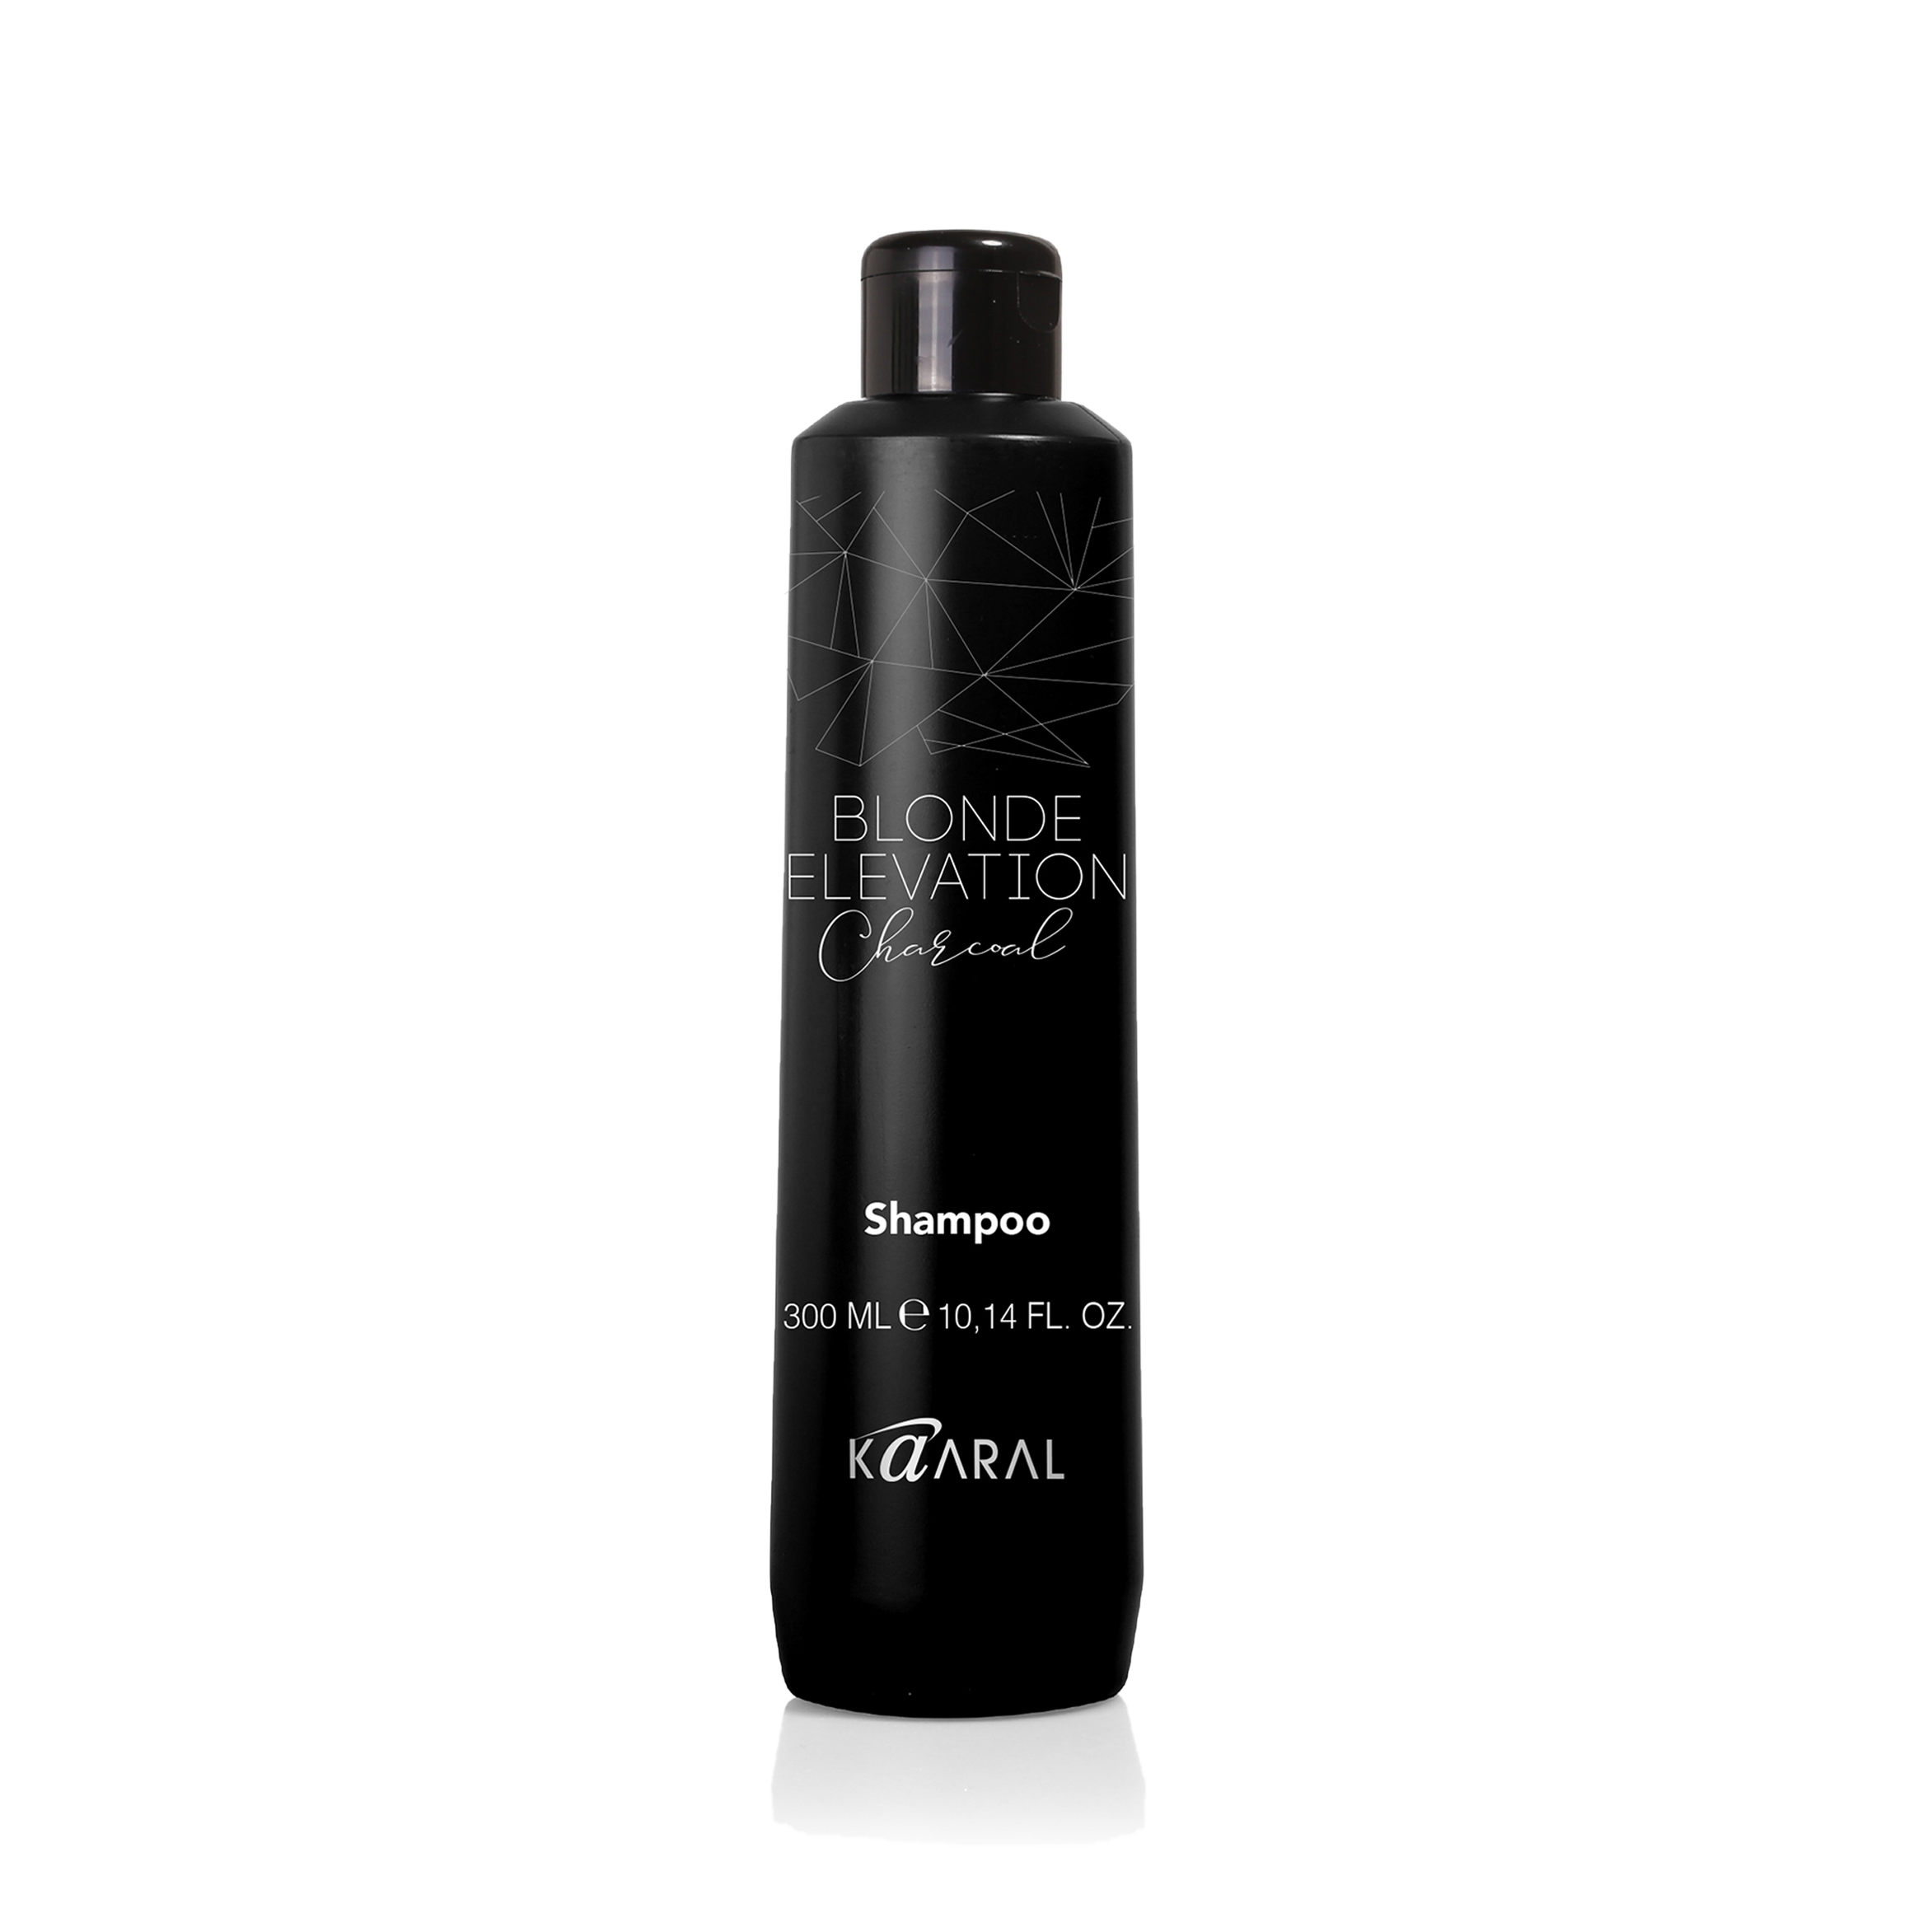 Kaaral - Blonde Elevation Charcoal Shampoo - Creata Beauty - Professional Beauty Products